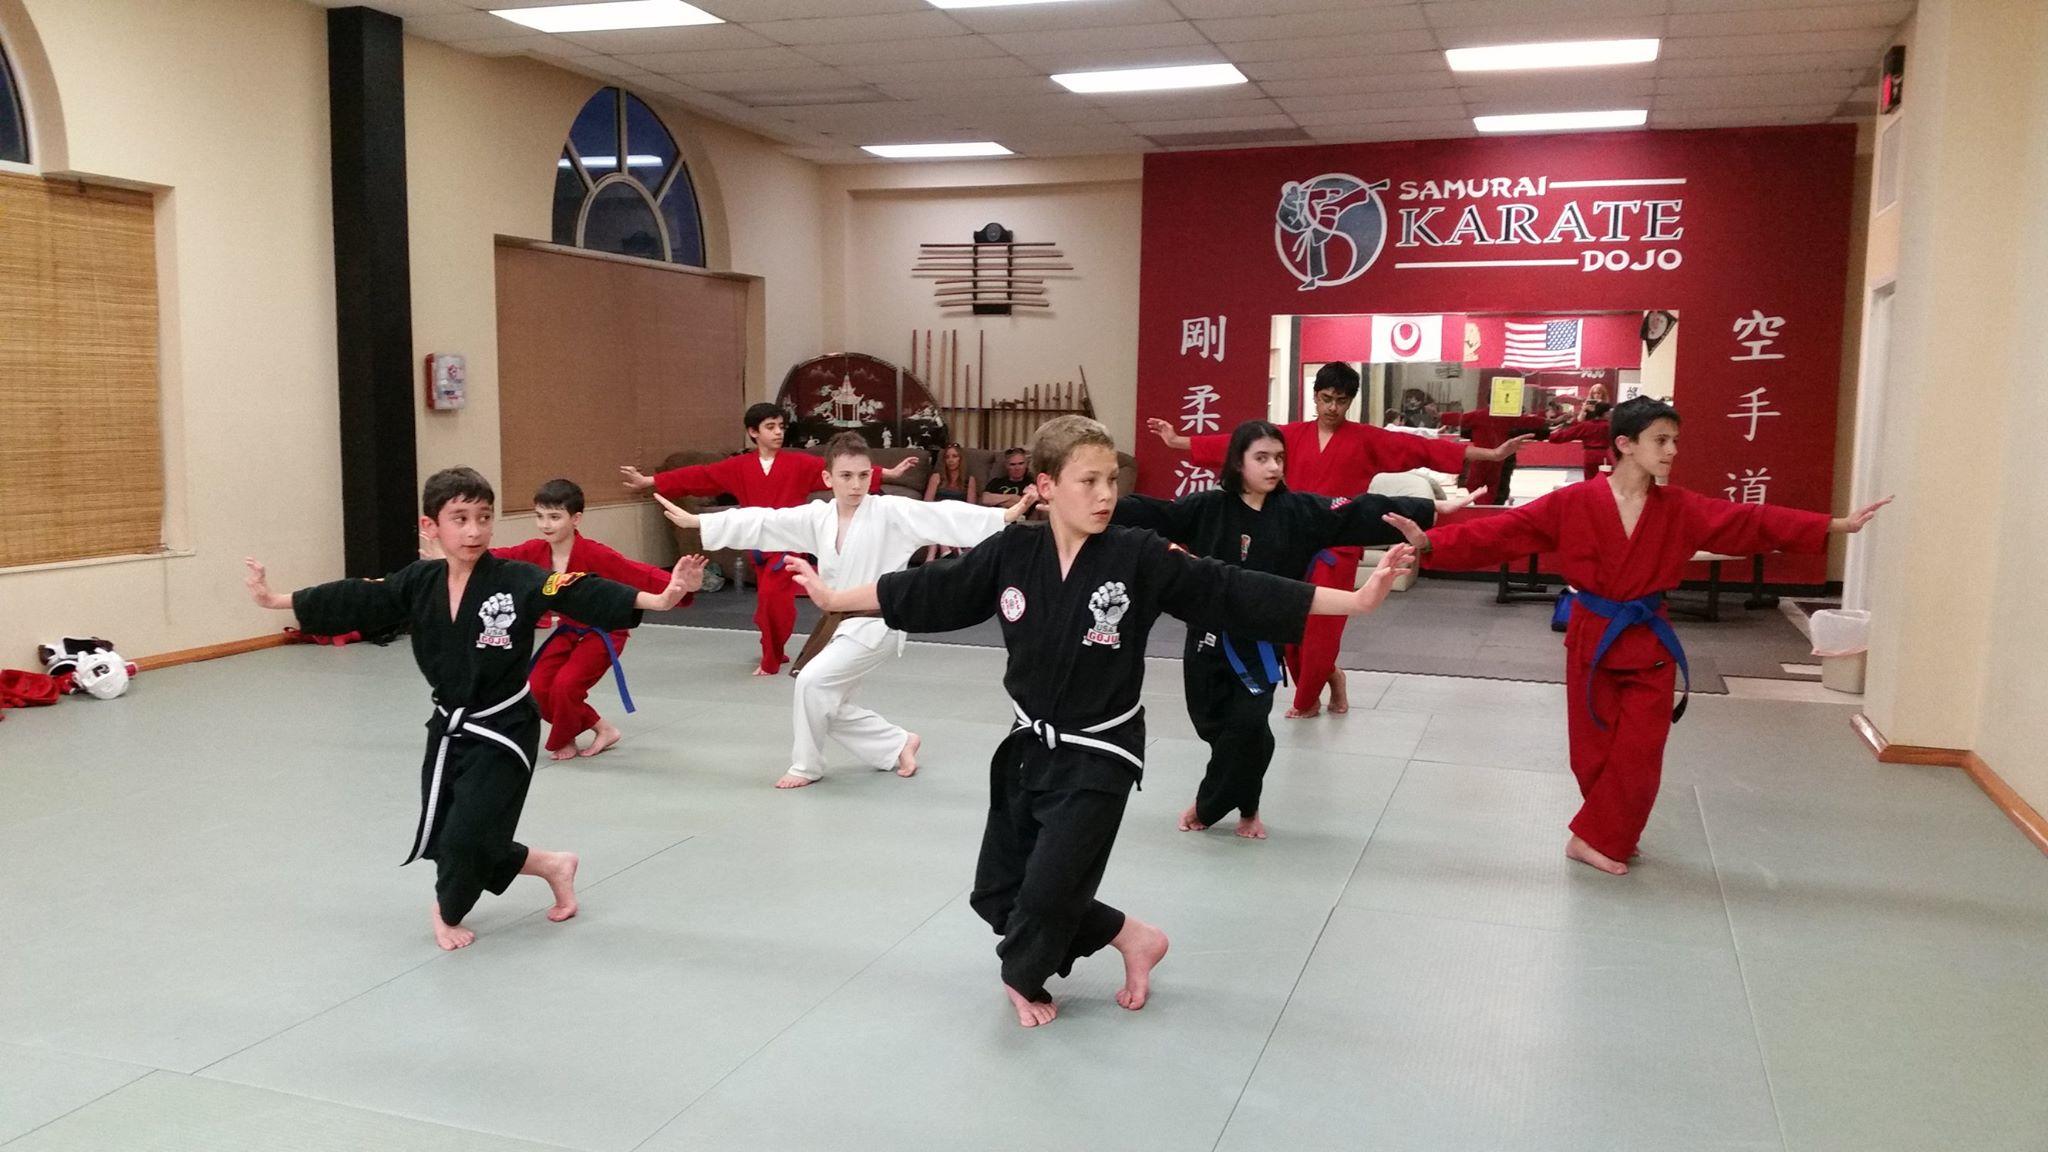 Houston Samurai Karate Dojo Coupons near me in Houston ...